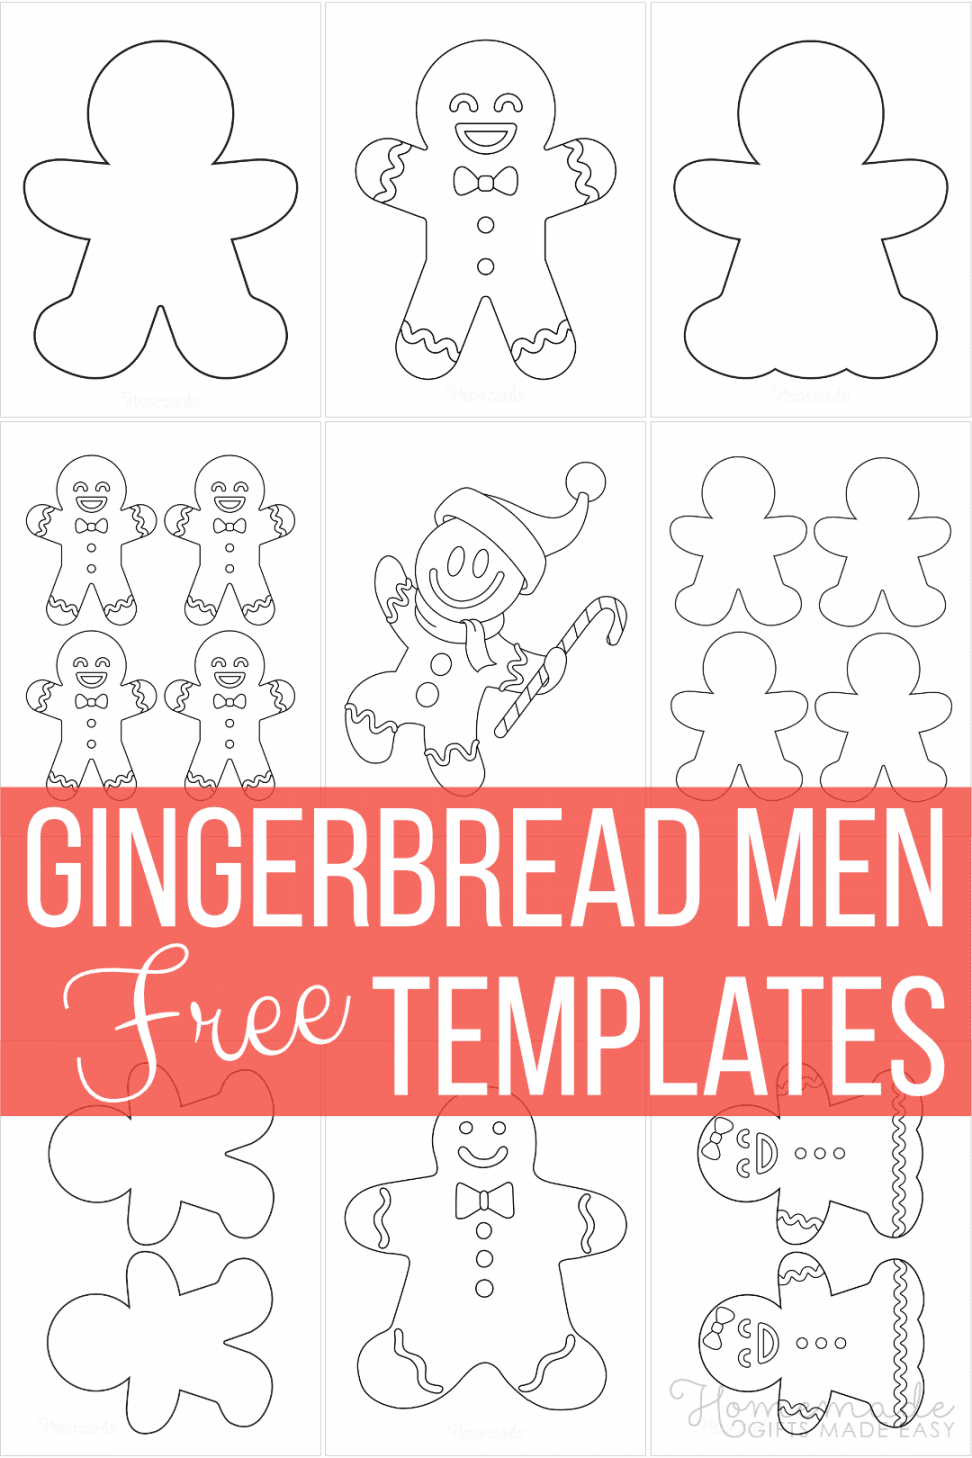 Free Printable Gingerbread Man Templates & Coloring Pages - FREE Printables - Printable Gingerbread Man Template